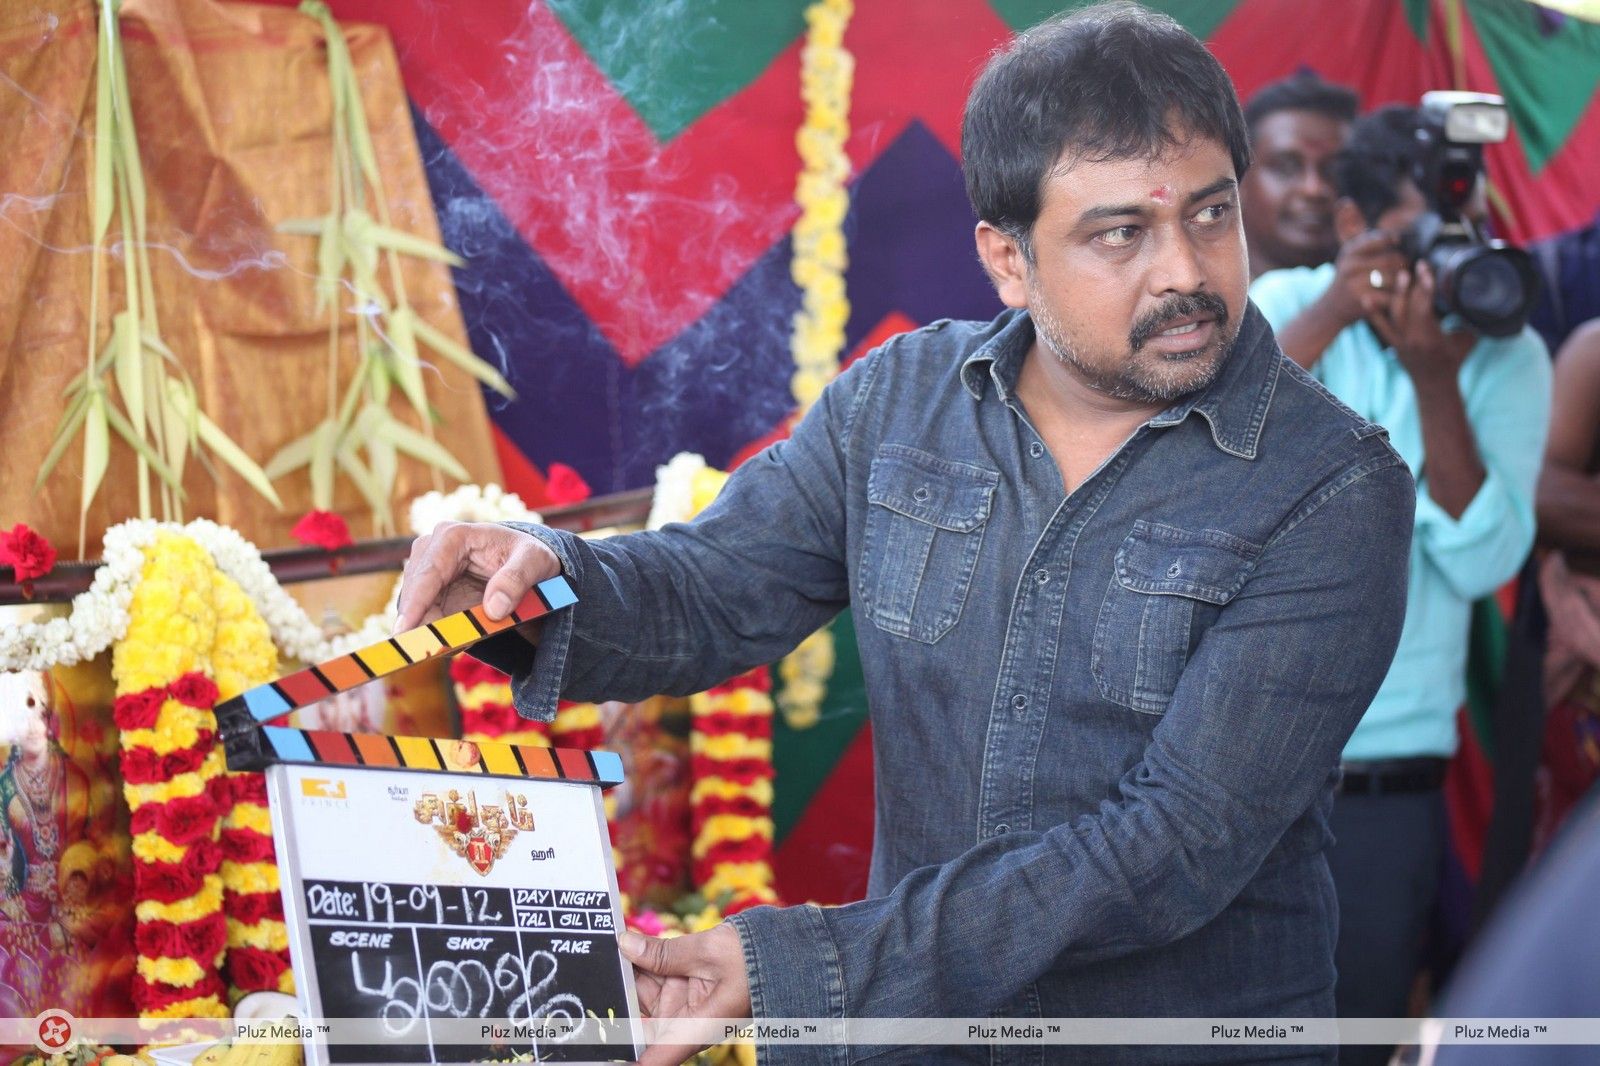 N. Linguswamy (Director) - Singam 2 Movie Pooja Stills | Picture 279302